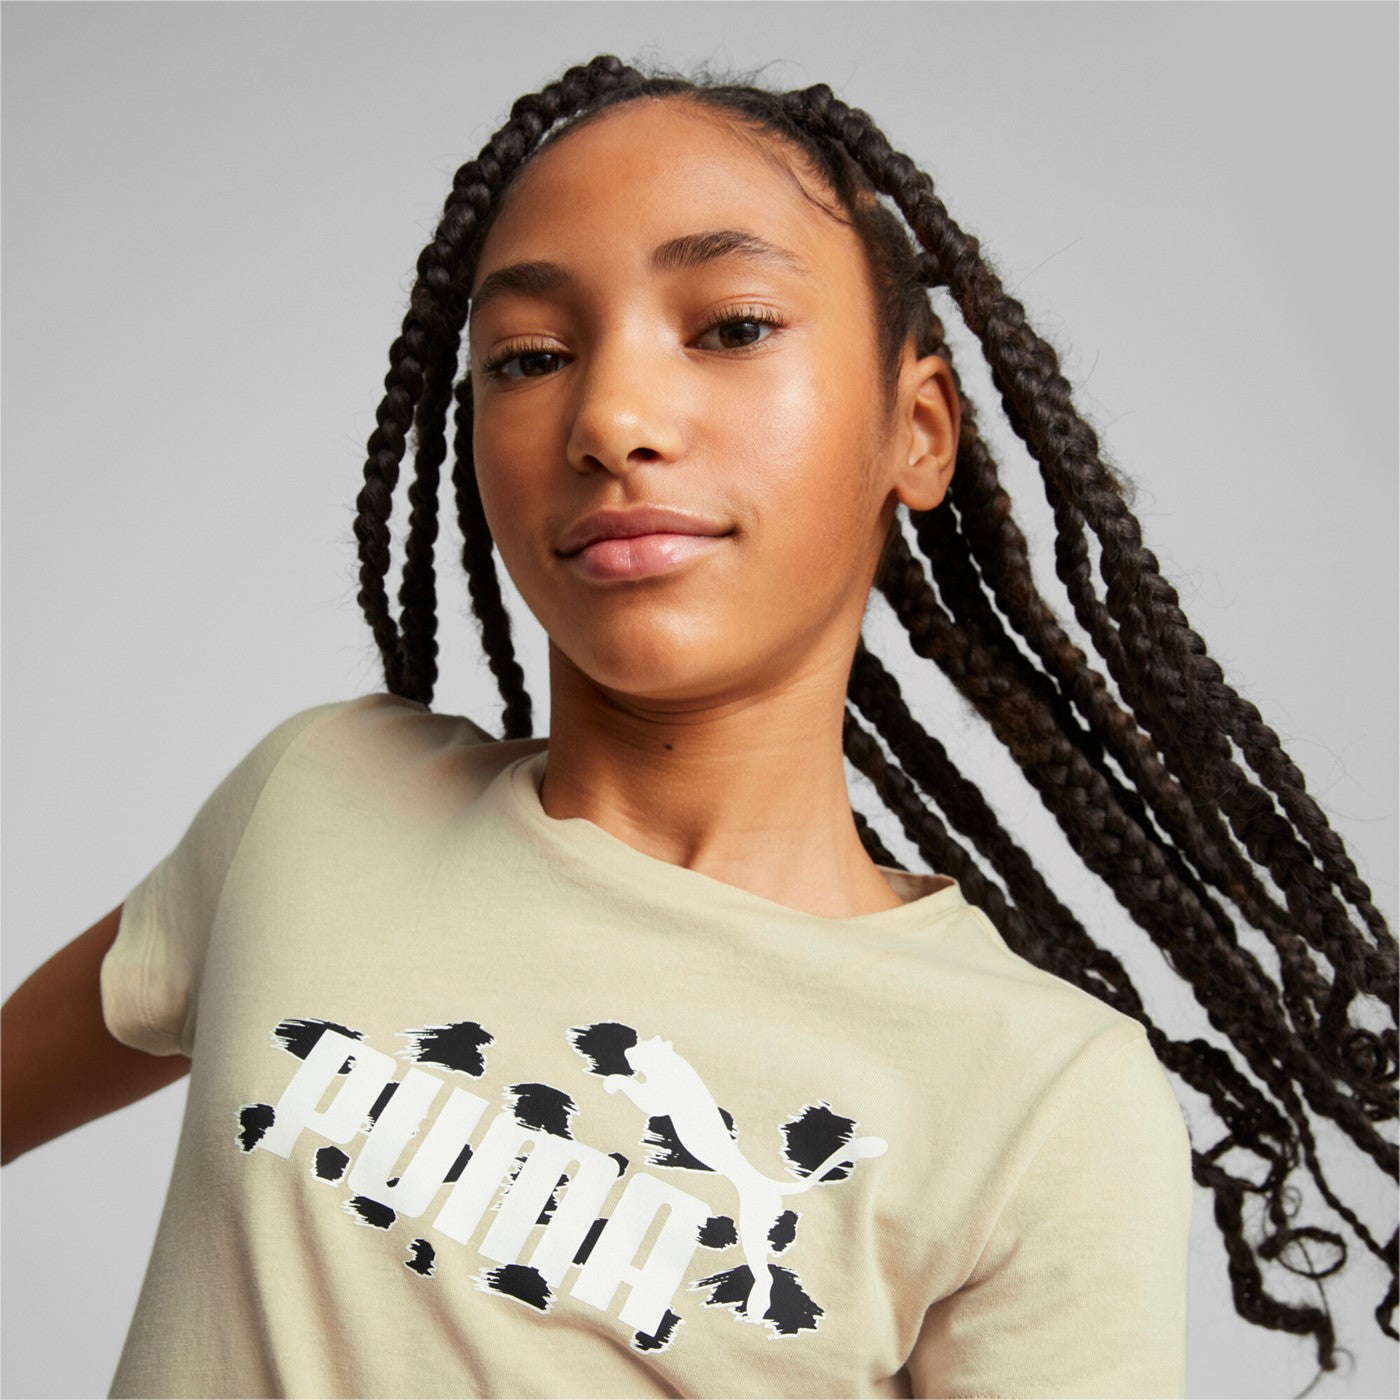 Puma T-shirt manica corta da bambina e ragazza Ess Animal AOP 673516-88 granola